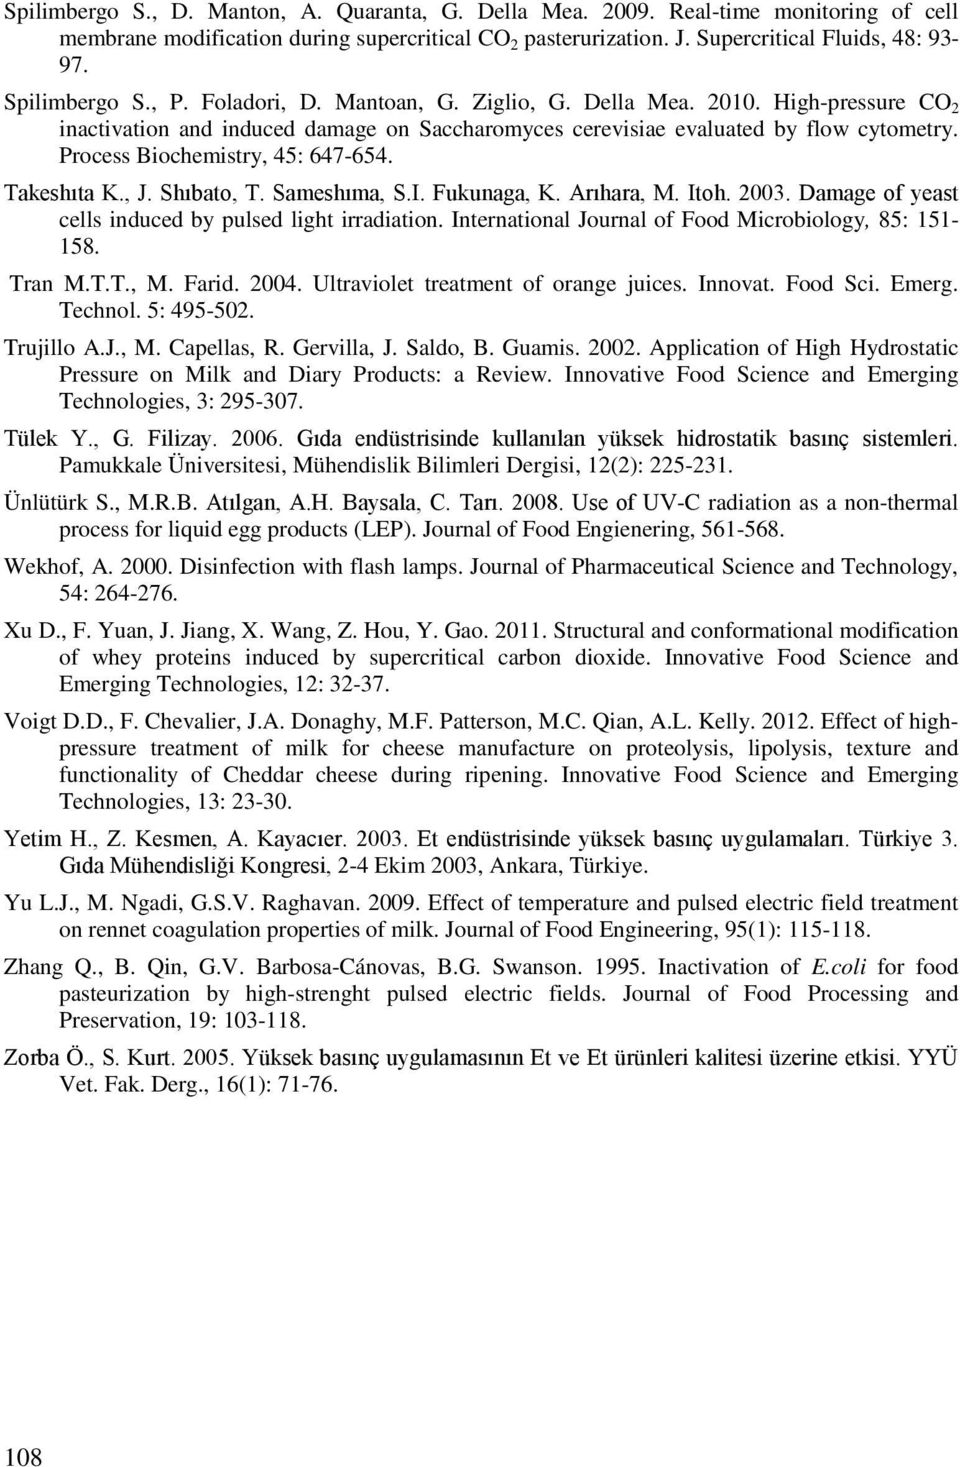 Process Biochemistry, 45: 647-654. Takeshıta K., J. Shıbato, T. Sameshıma, S.I. Fukunaga, K. Arıhara, M. Itoh. 2003. Damage of yeast cells induced by pulsed light irradiation.